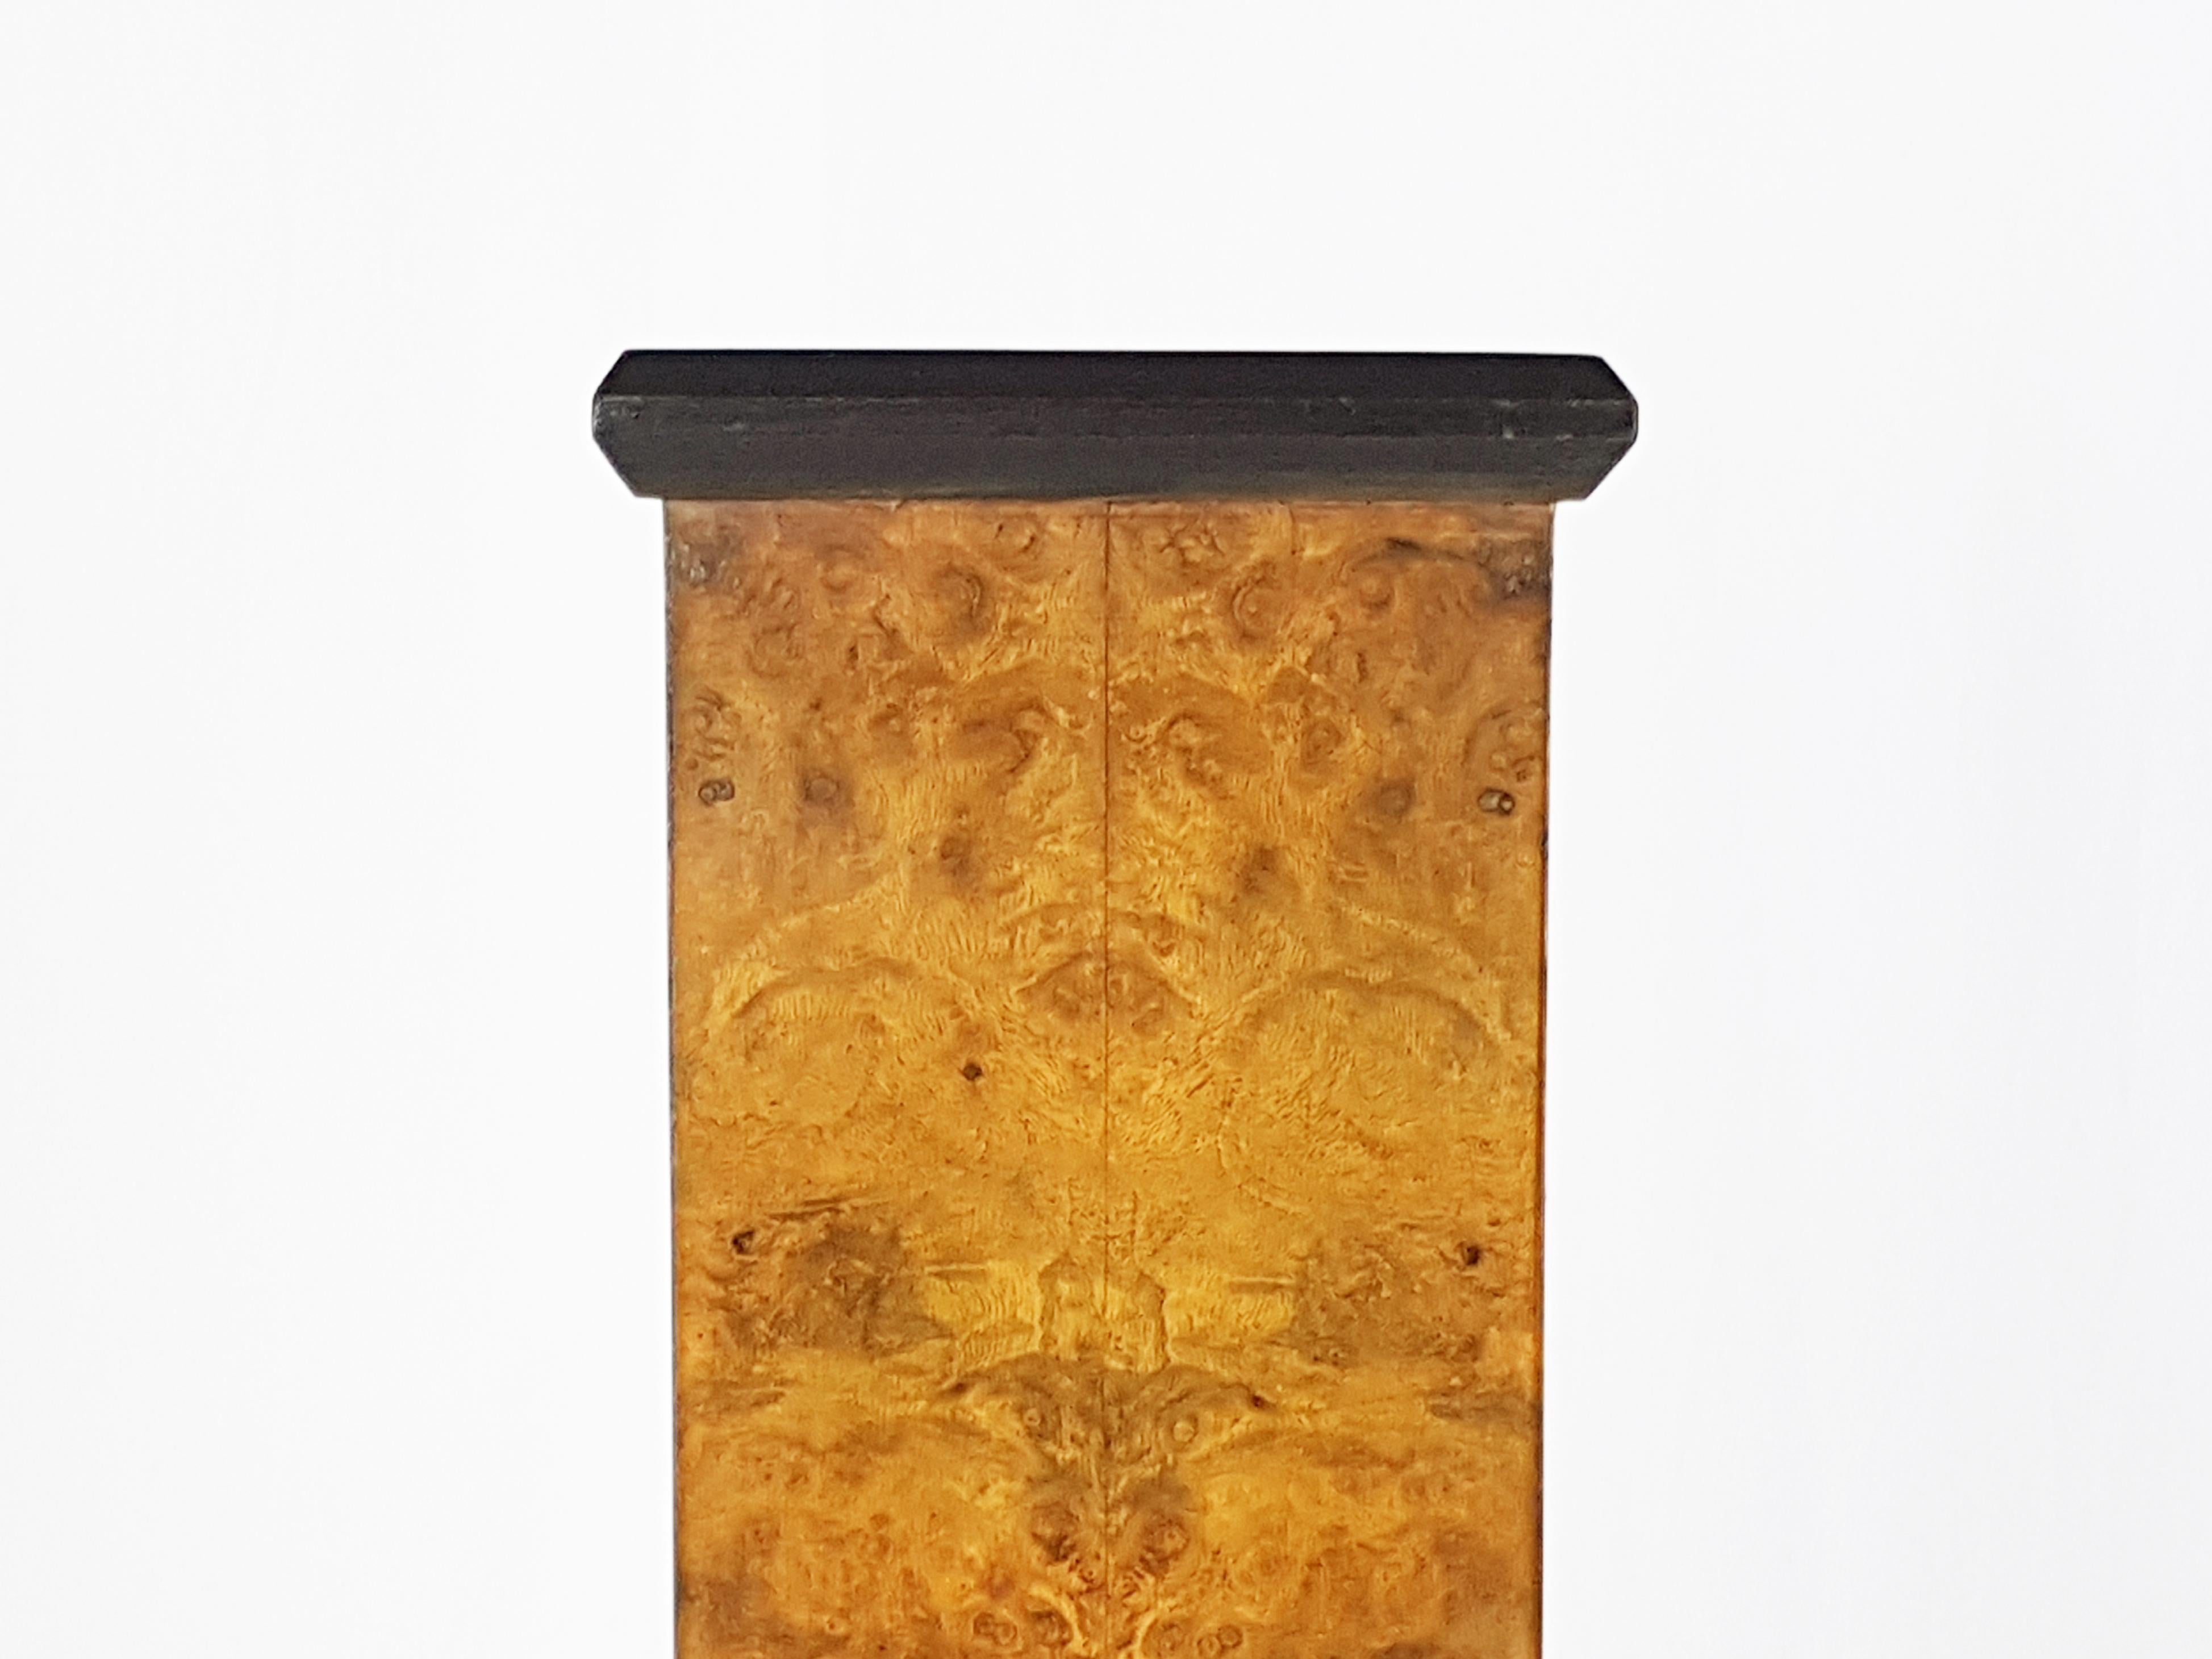 Italian Walnut Briar Root 1930s Pedestal with Shelves Attributed to Domus Nova (Furnier)